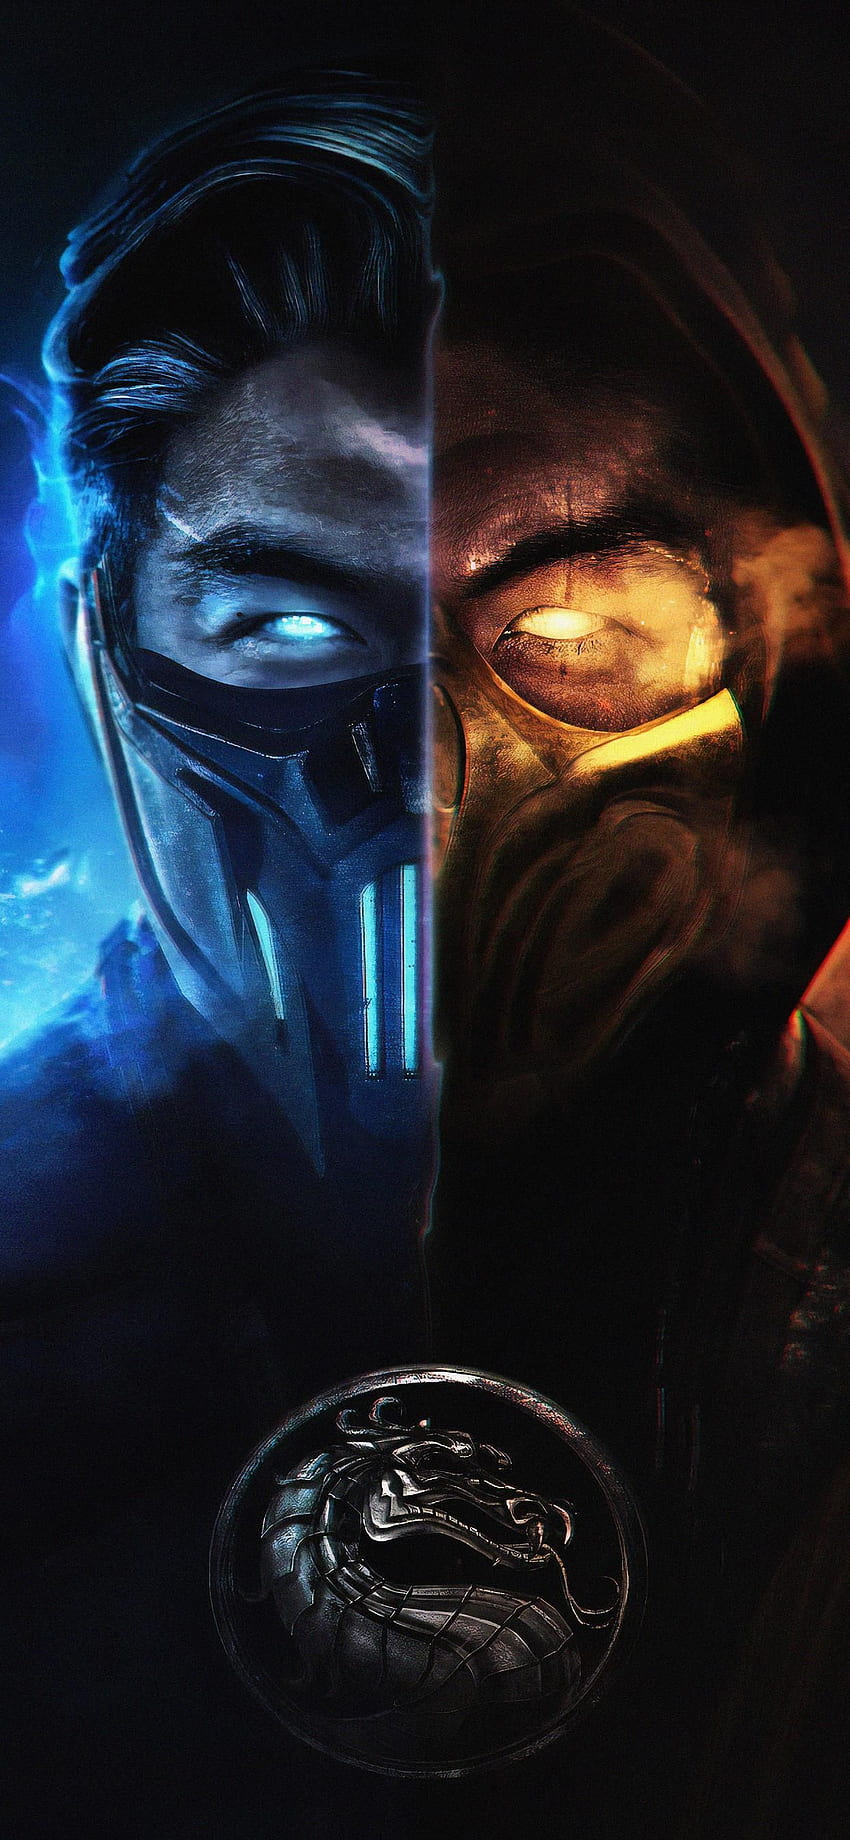 Mortal kombat subzero and scorpion iPhone X in 2020. Mortal kombat x ...